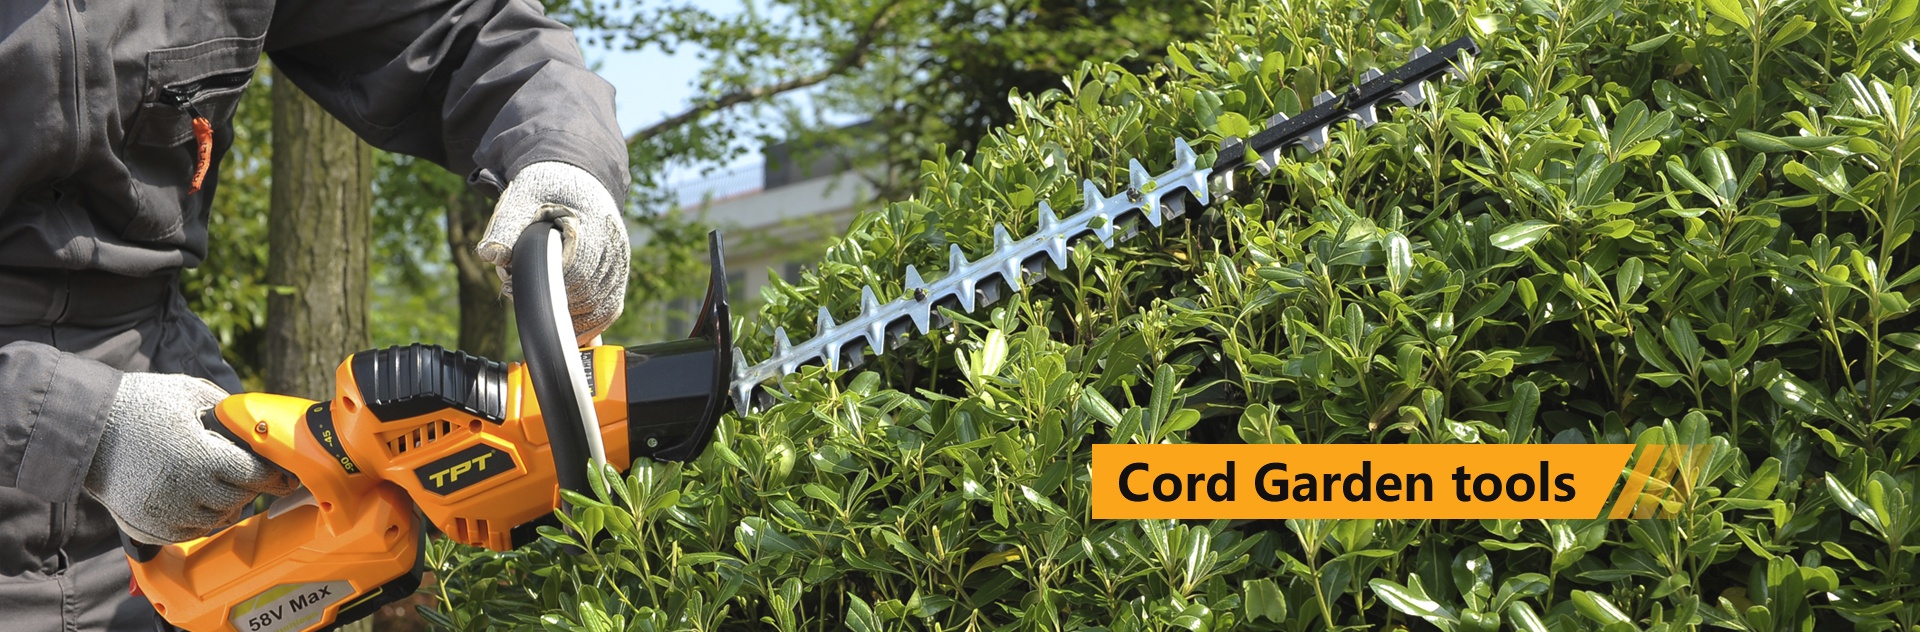 Cord Garden Tools